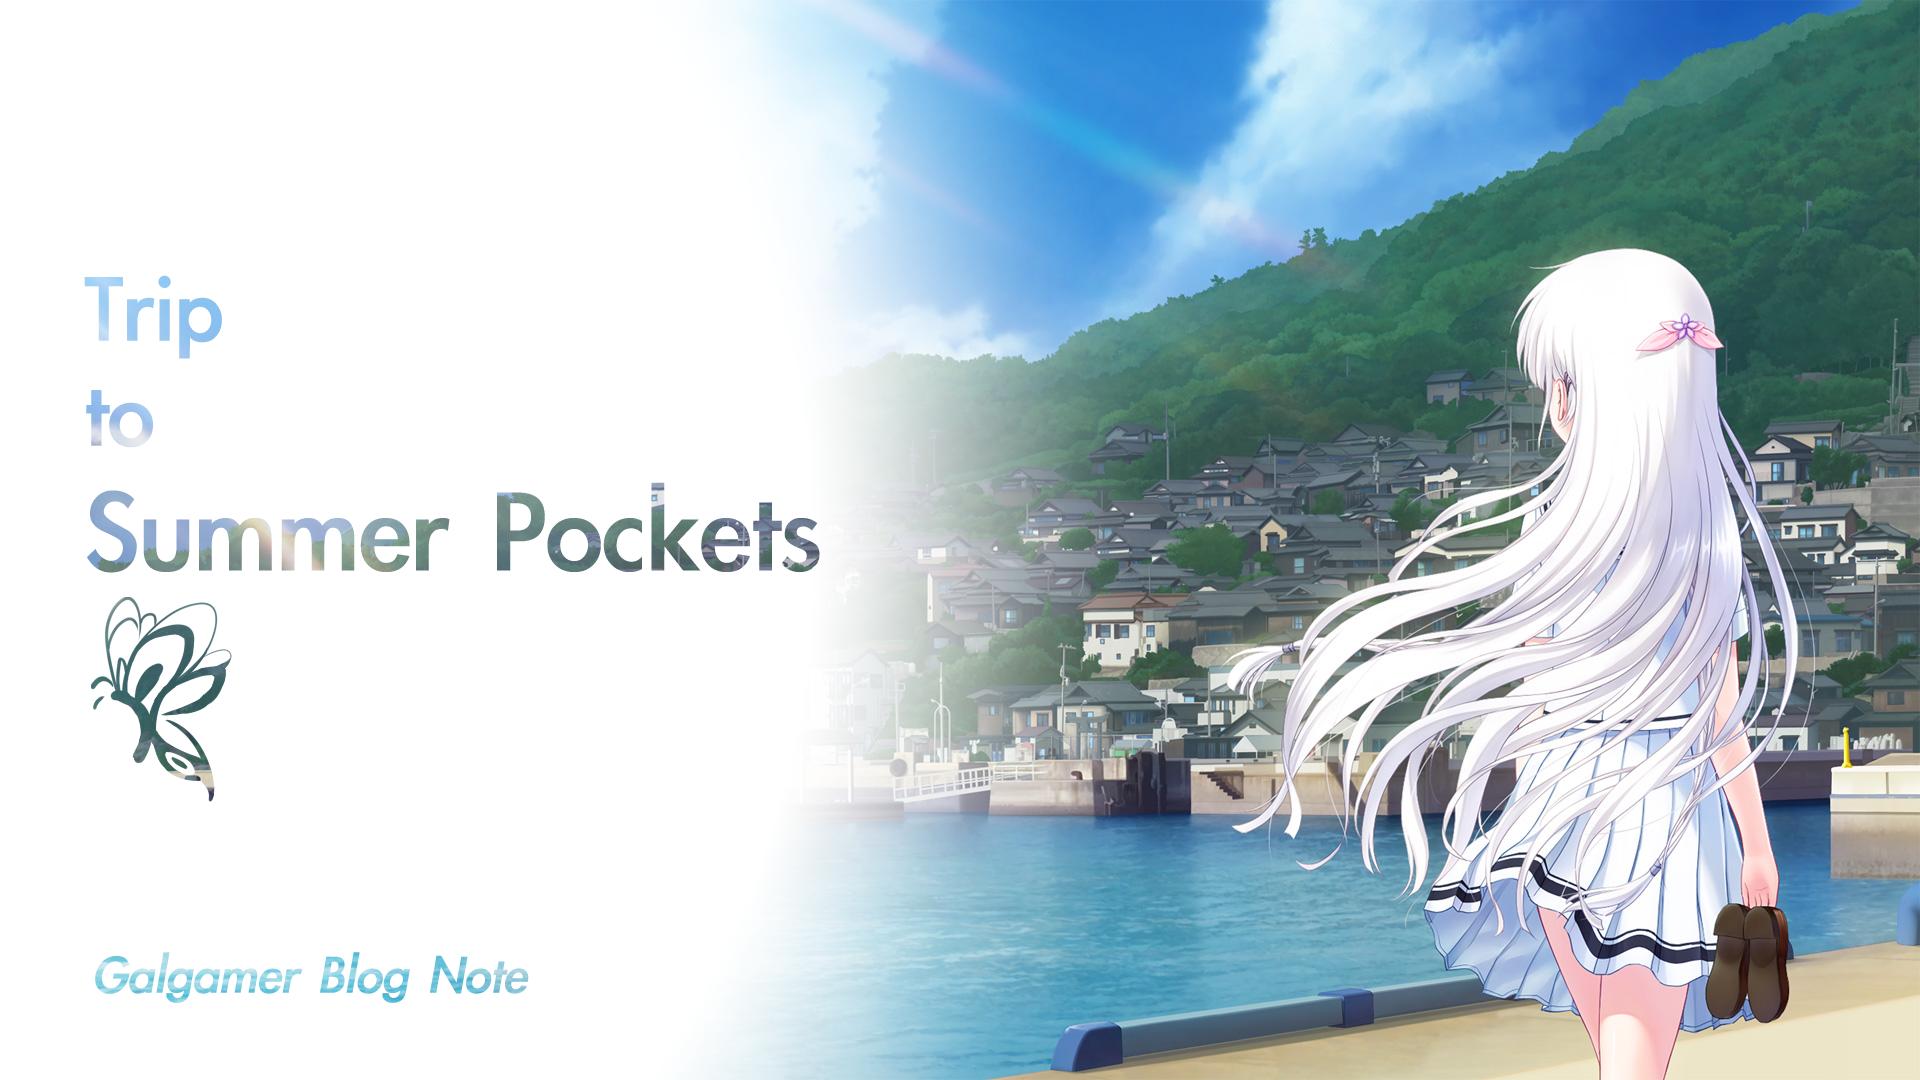 Blog Note 8：Summer Pockets 聖地考察指南 - 前篇